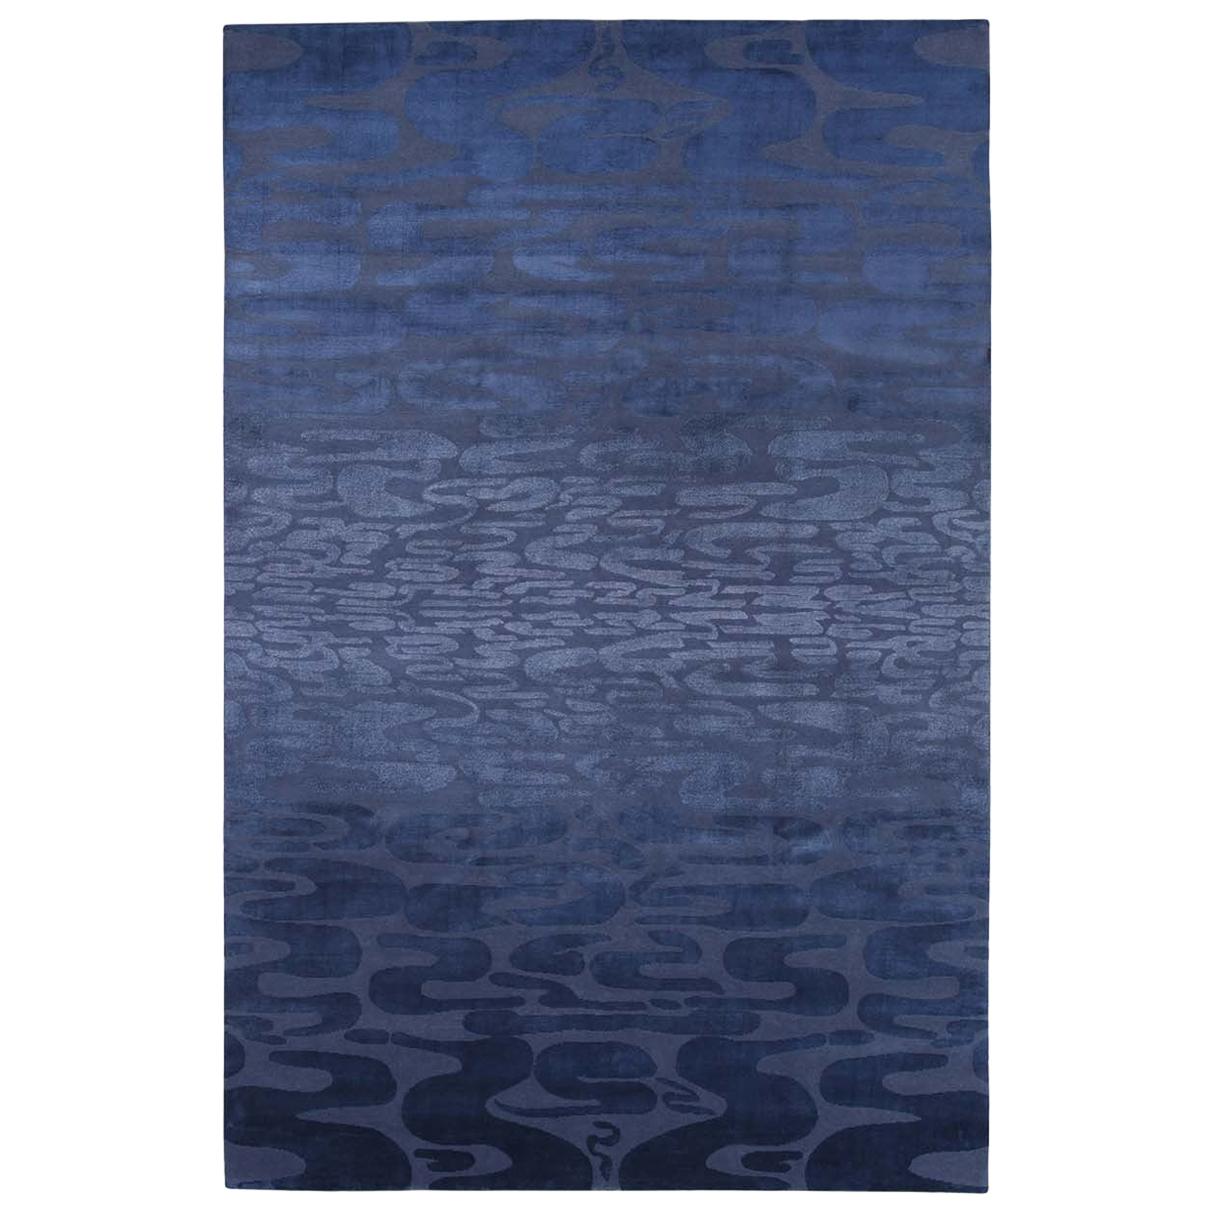 Onde Blue Carpet by Ico Parisi